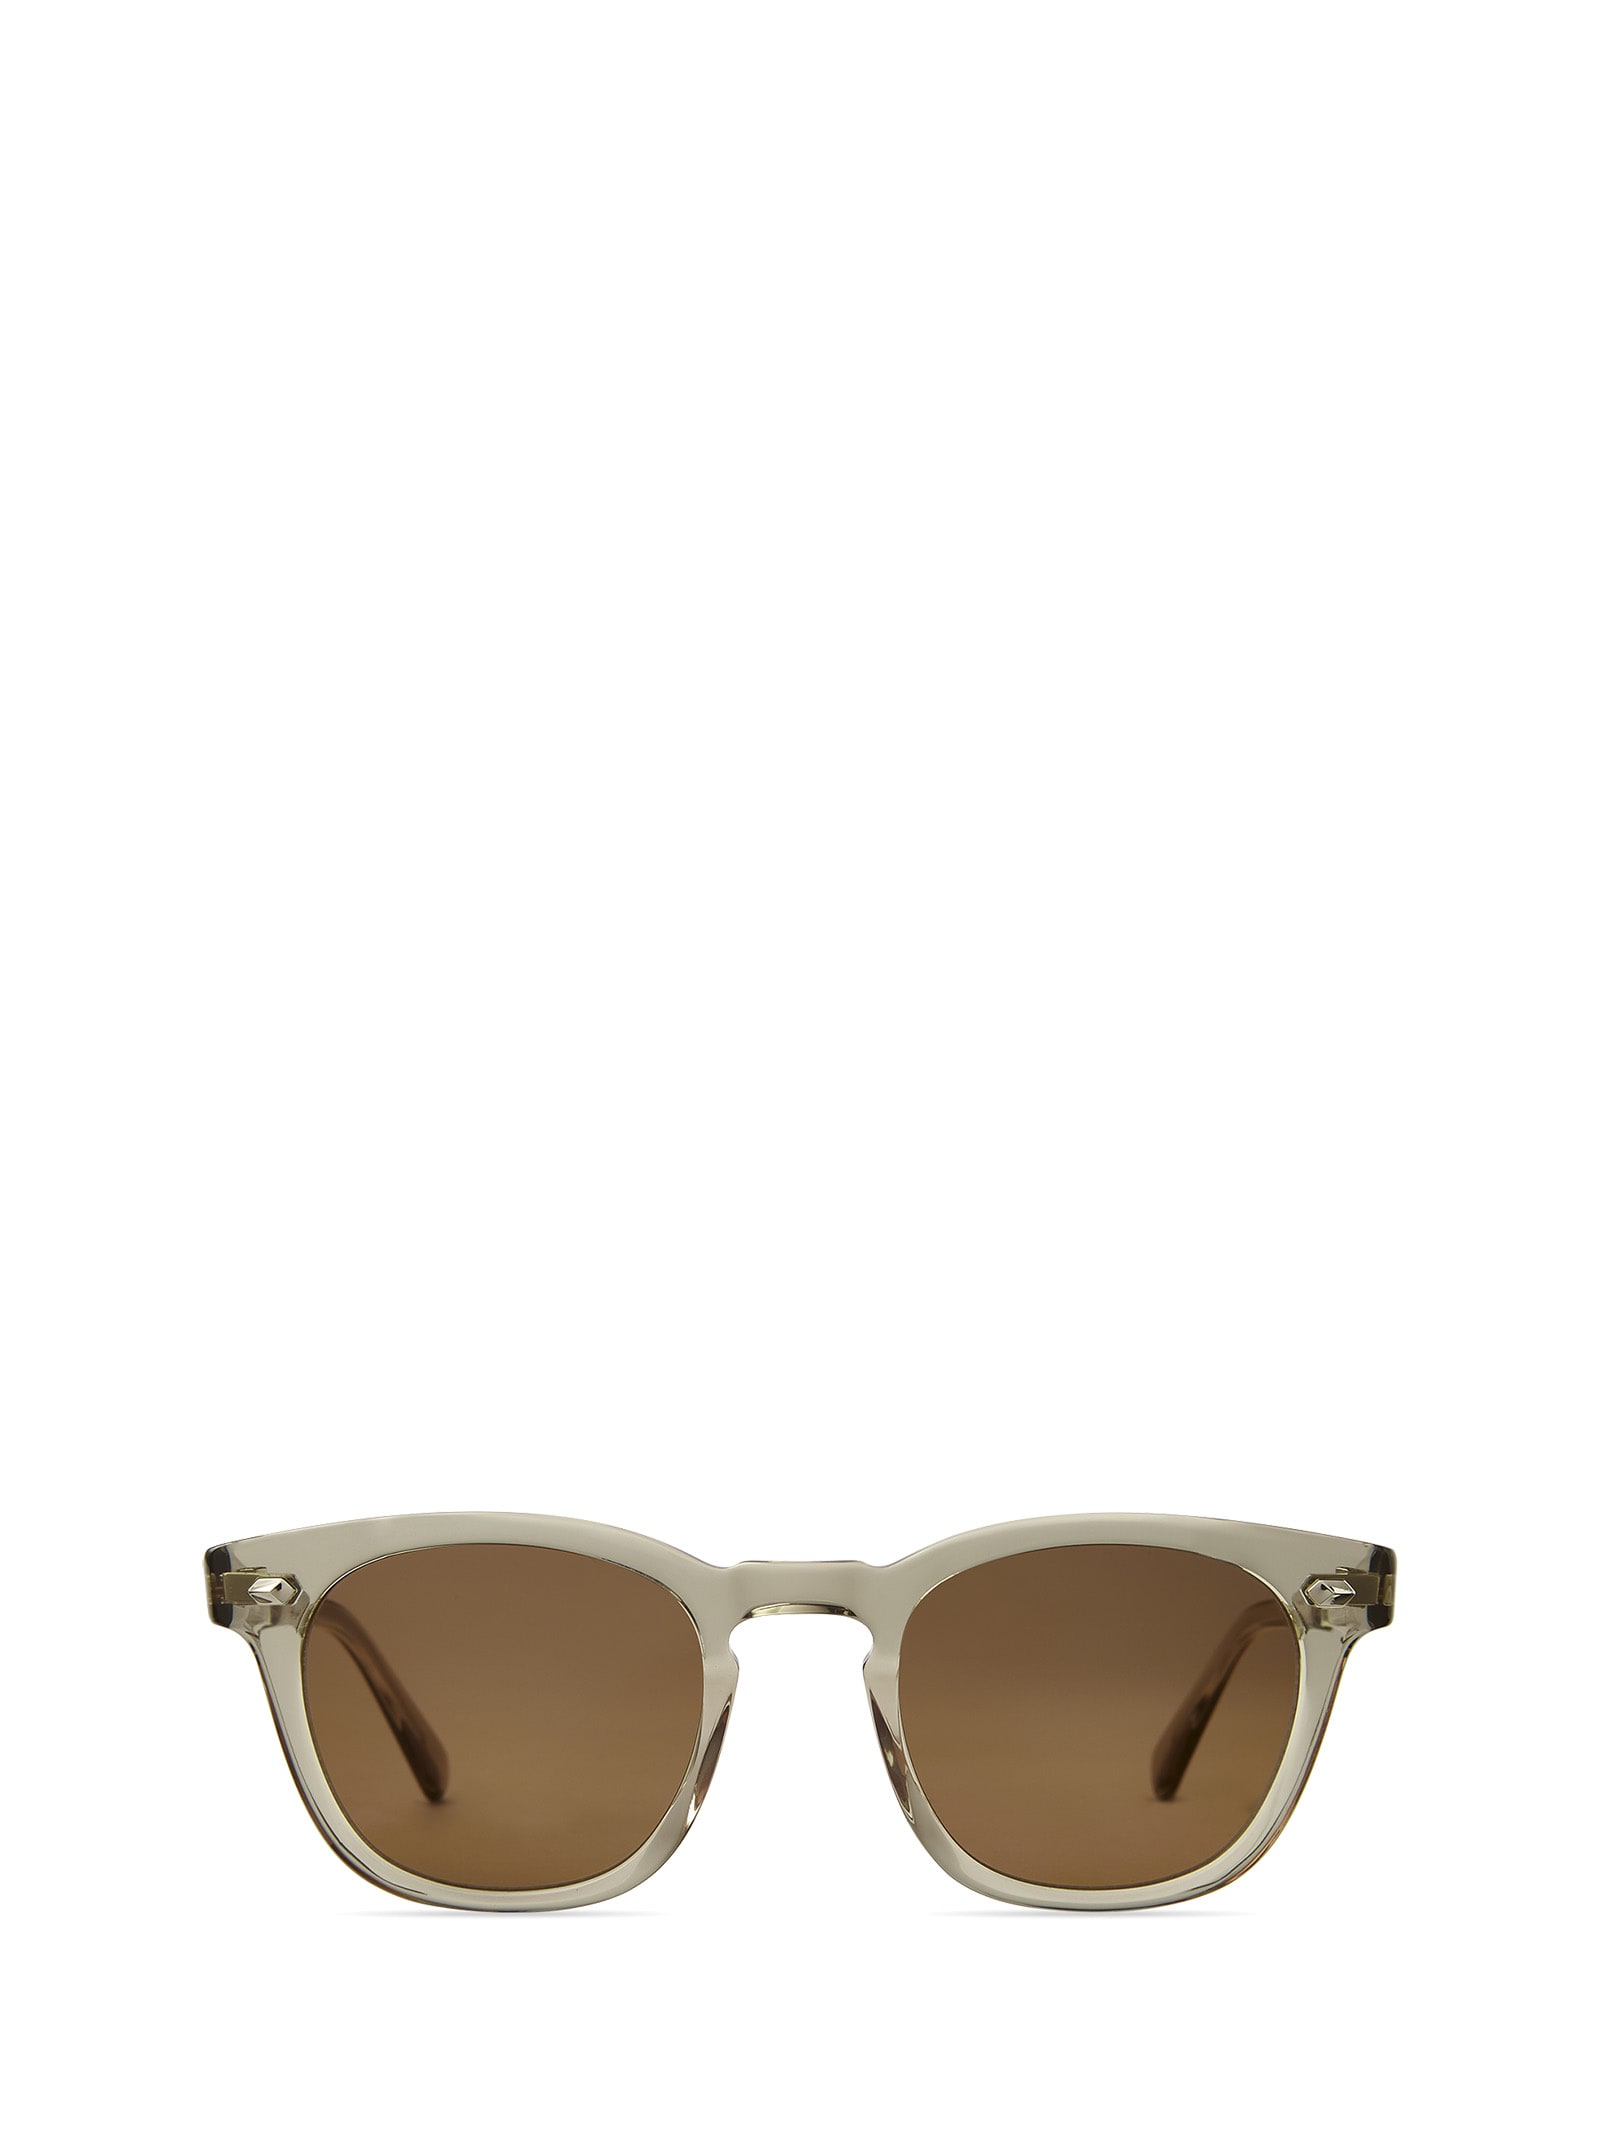 Hanalei S Olivine-white Gold Sunglasses